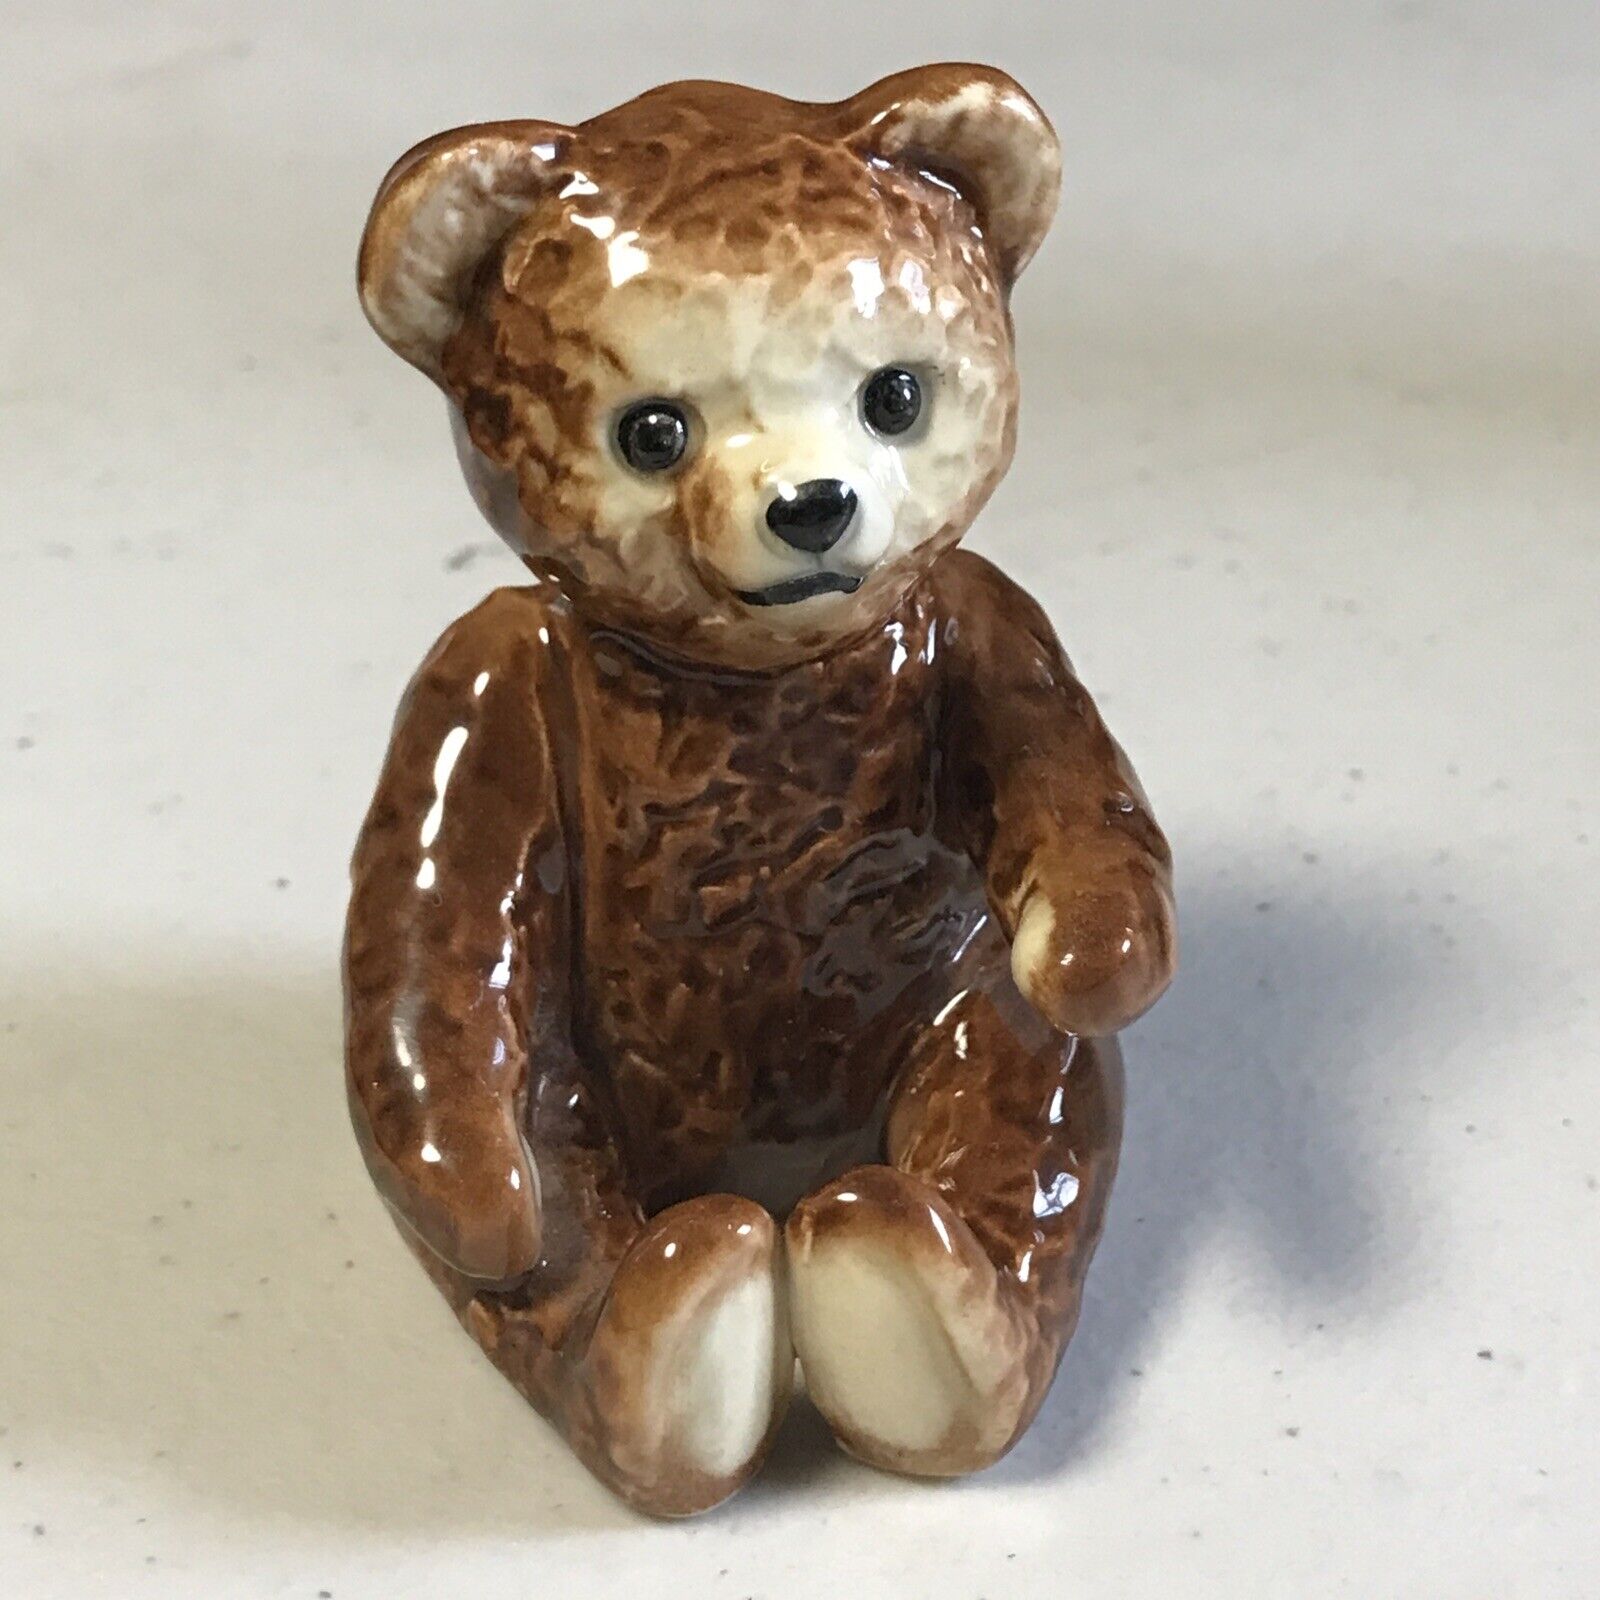 Vintage Goebel (1979-1990) Sitting Teddy Bear Figurine 33001-07